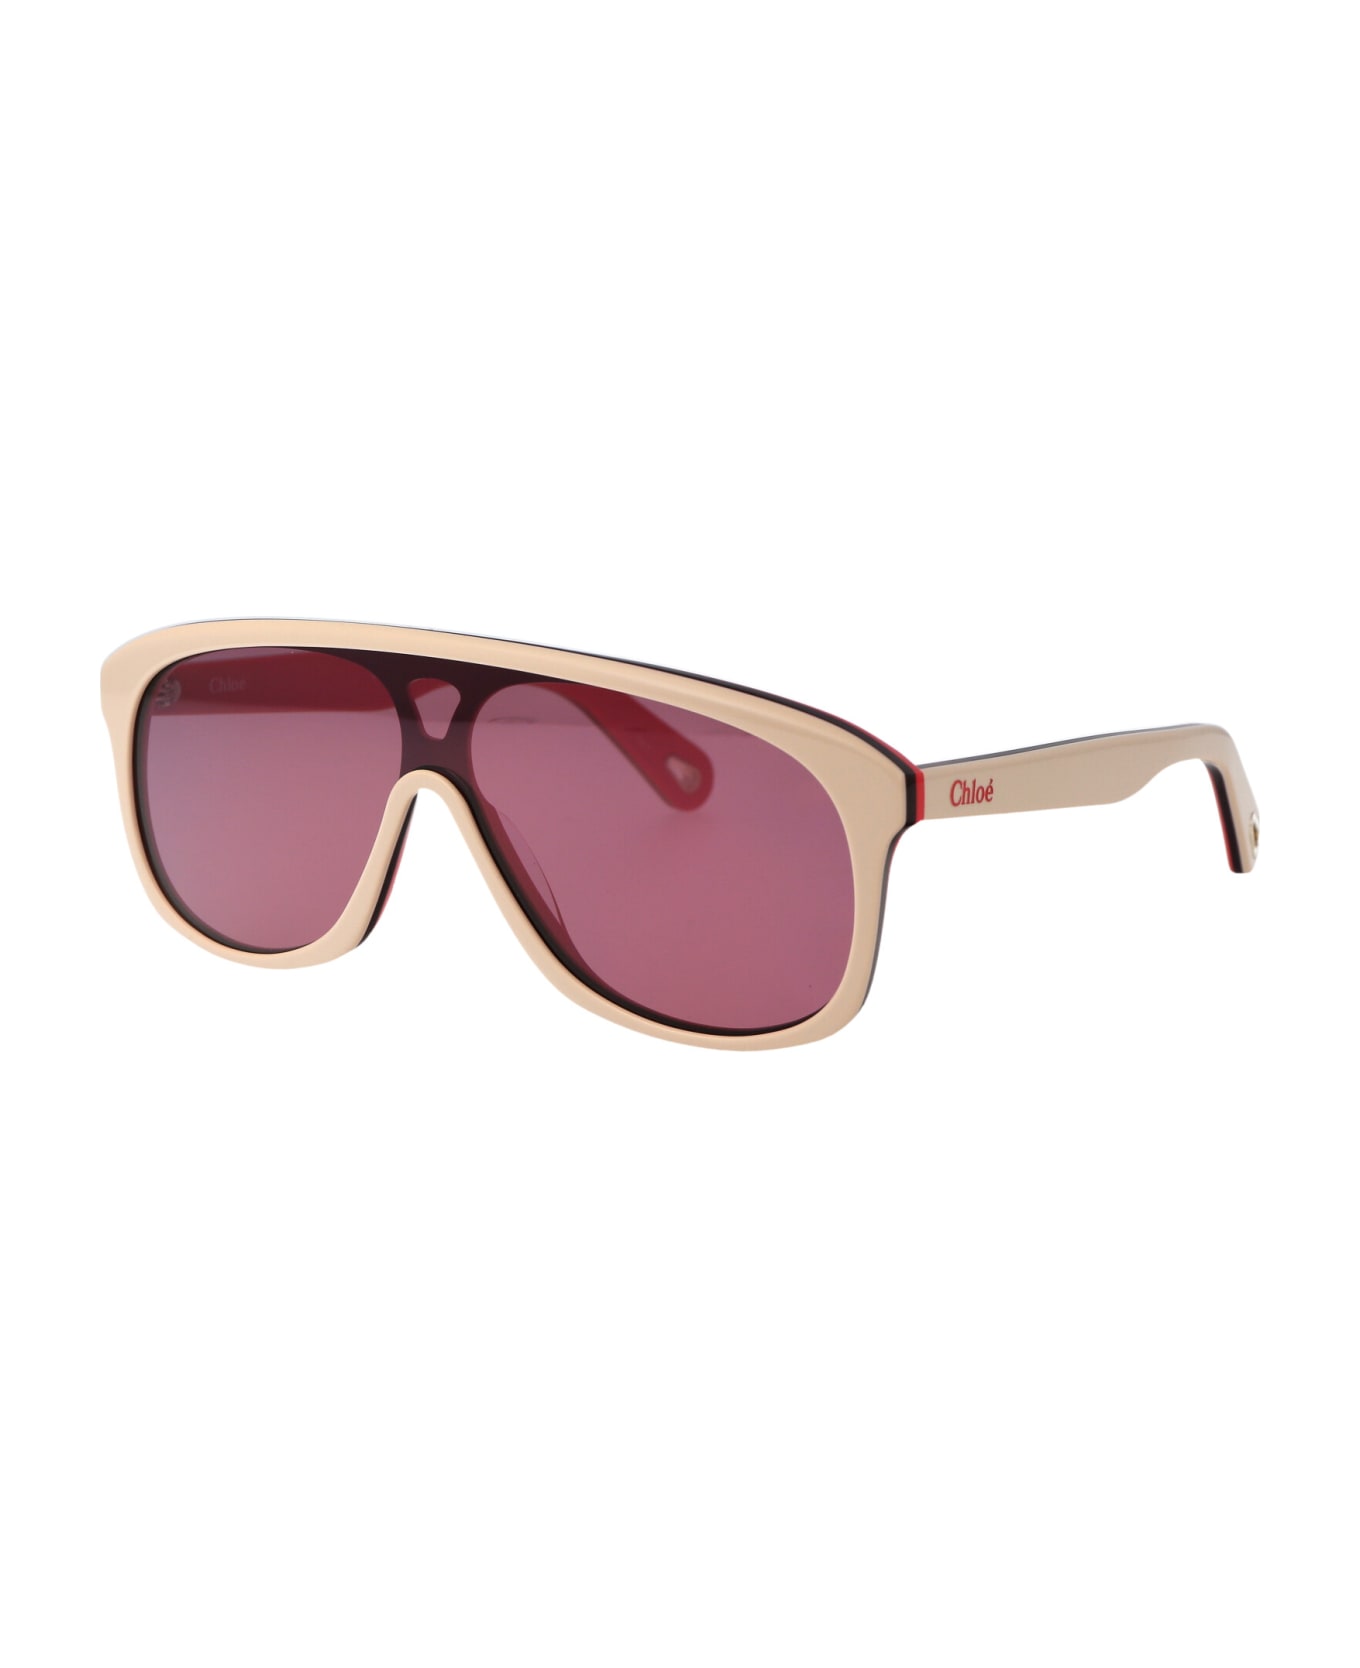 Chloé Eyewear Ch0212s Sunglasses - 005 IVORY IVORY PINK